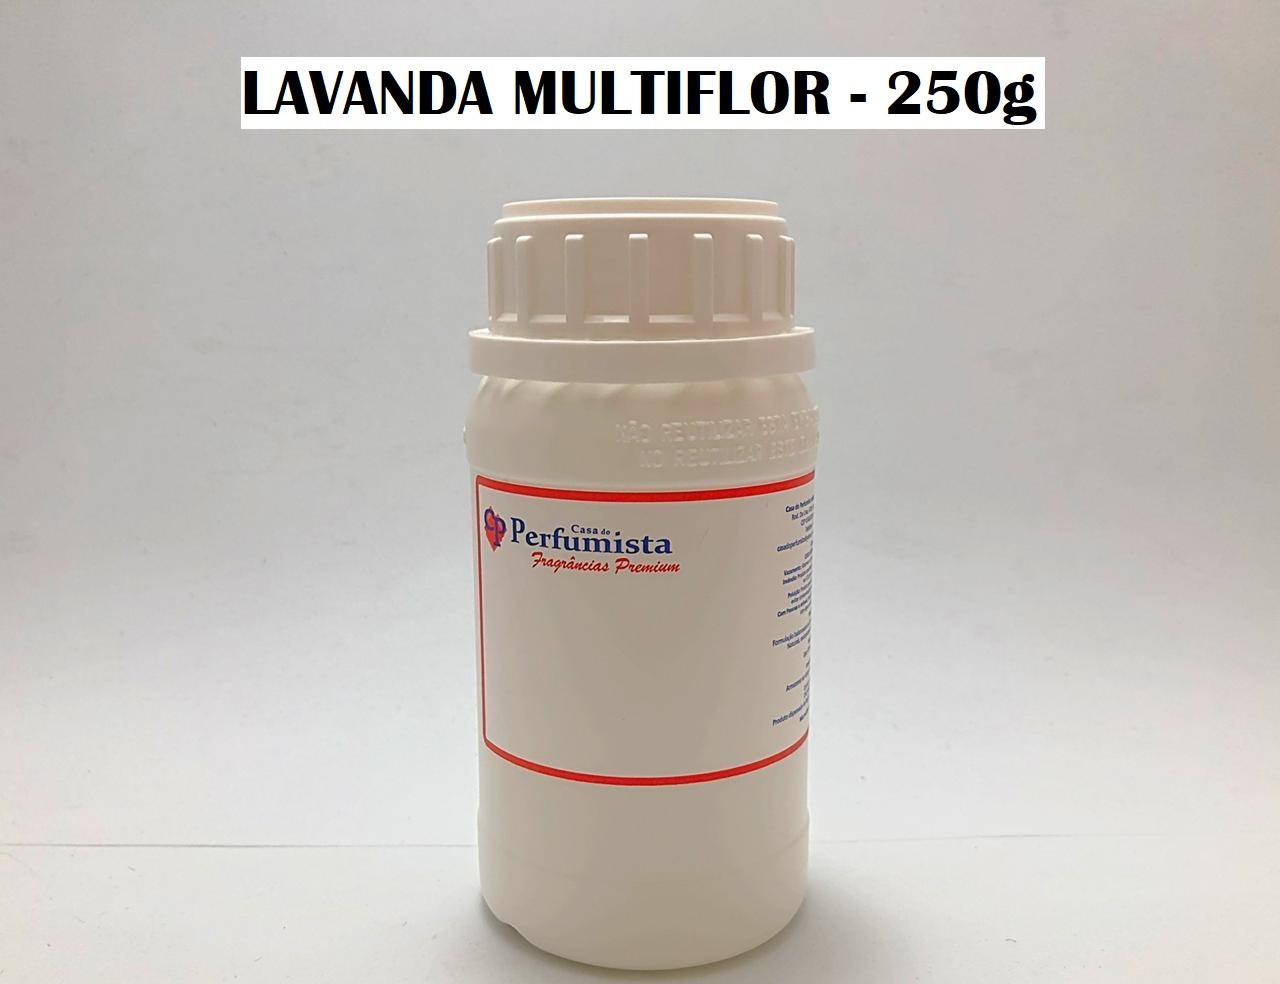 LAVANDA MULTIFLOR - 250g